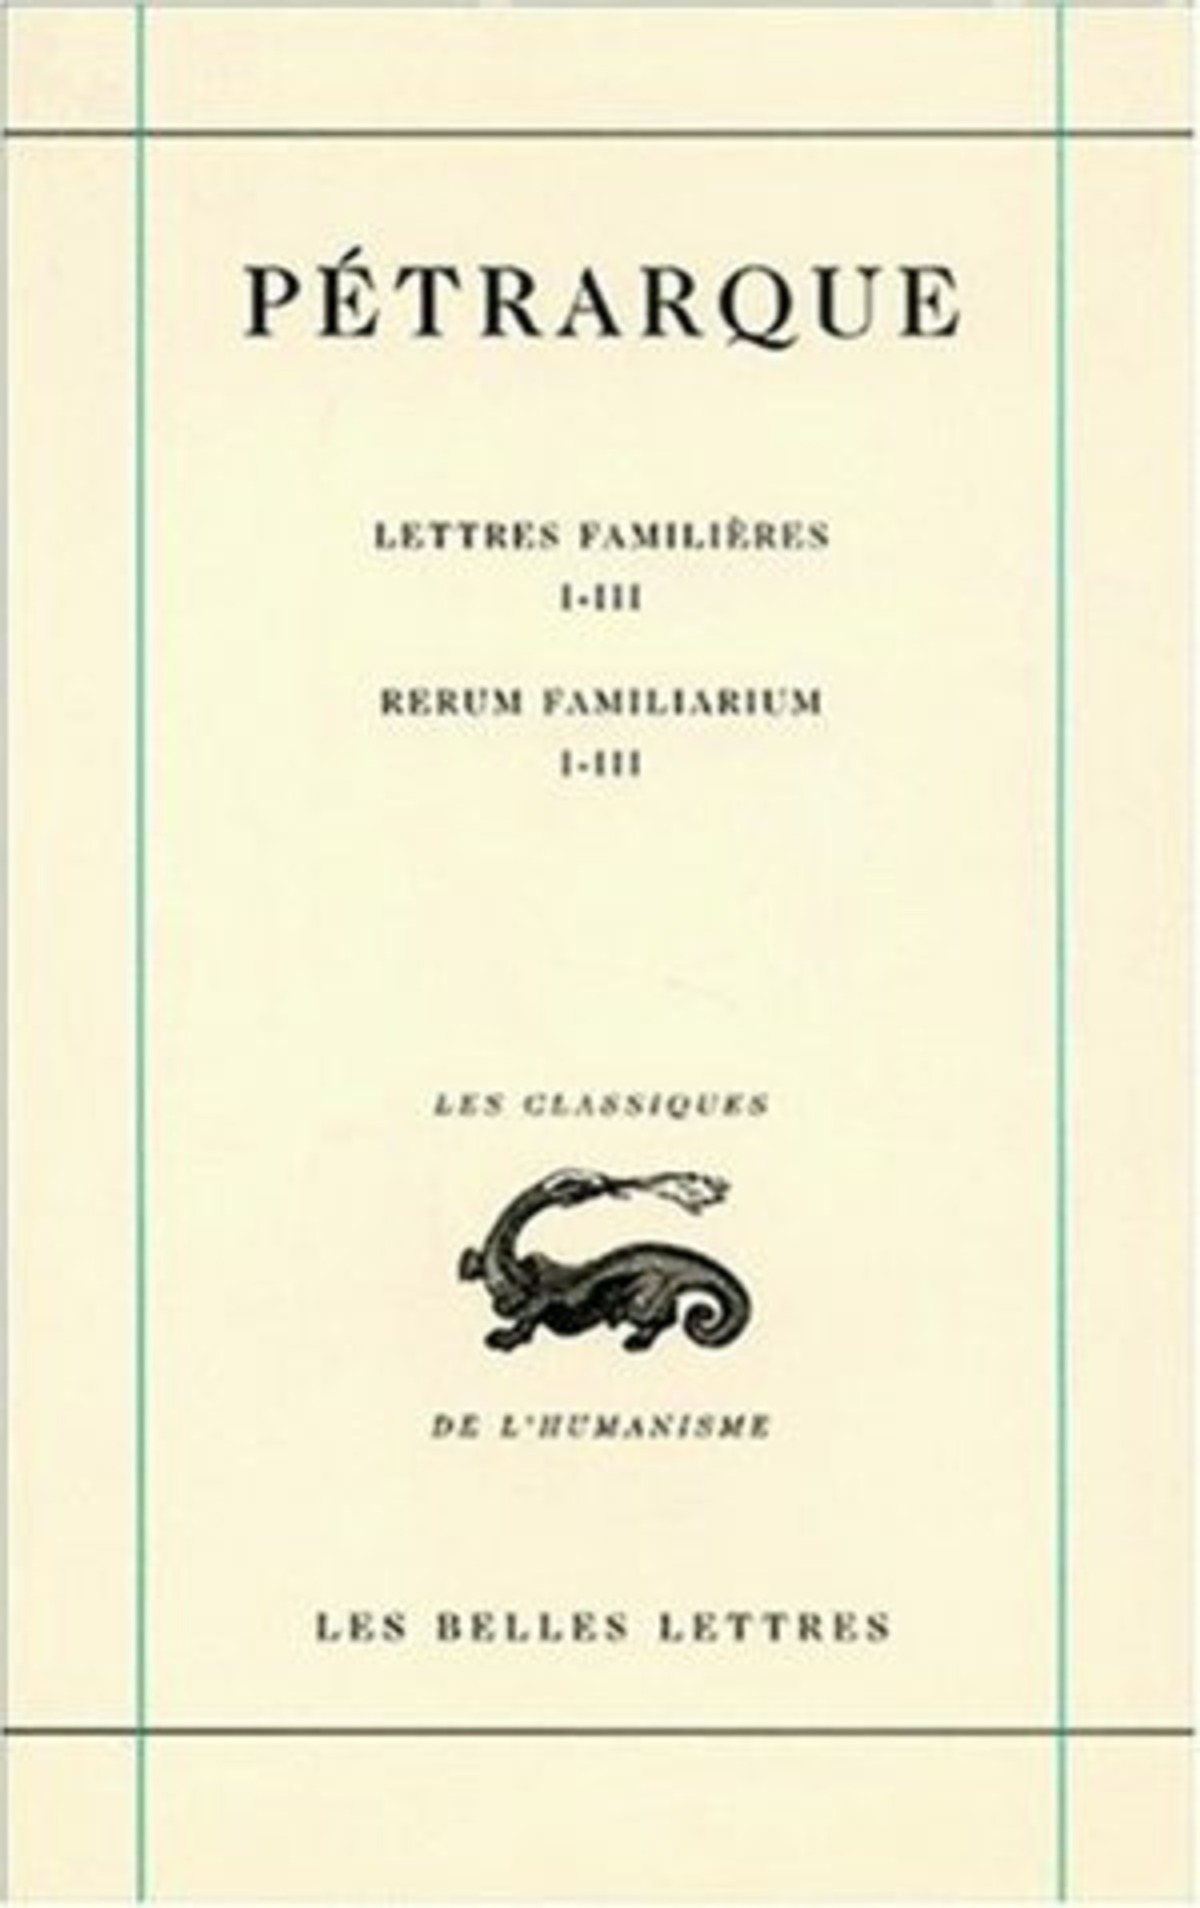 Lettres familières. Tome I : Livres I-III / Rerum Familiarium. Libri I-III